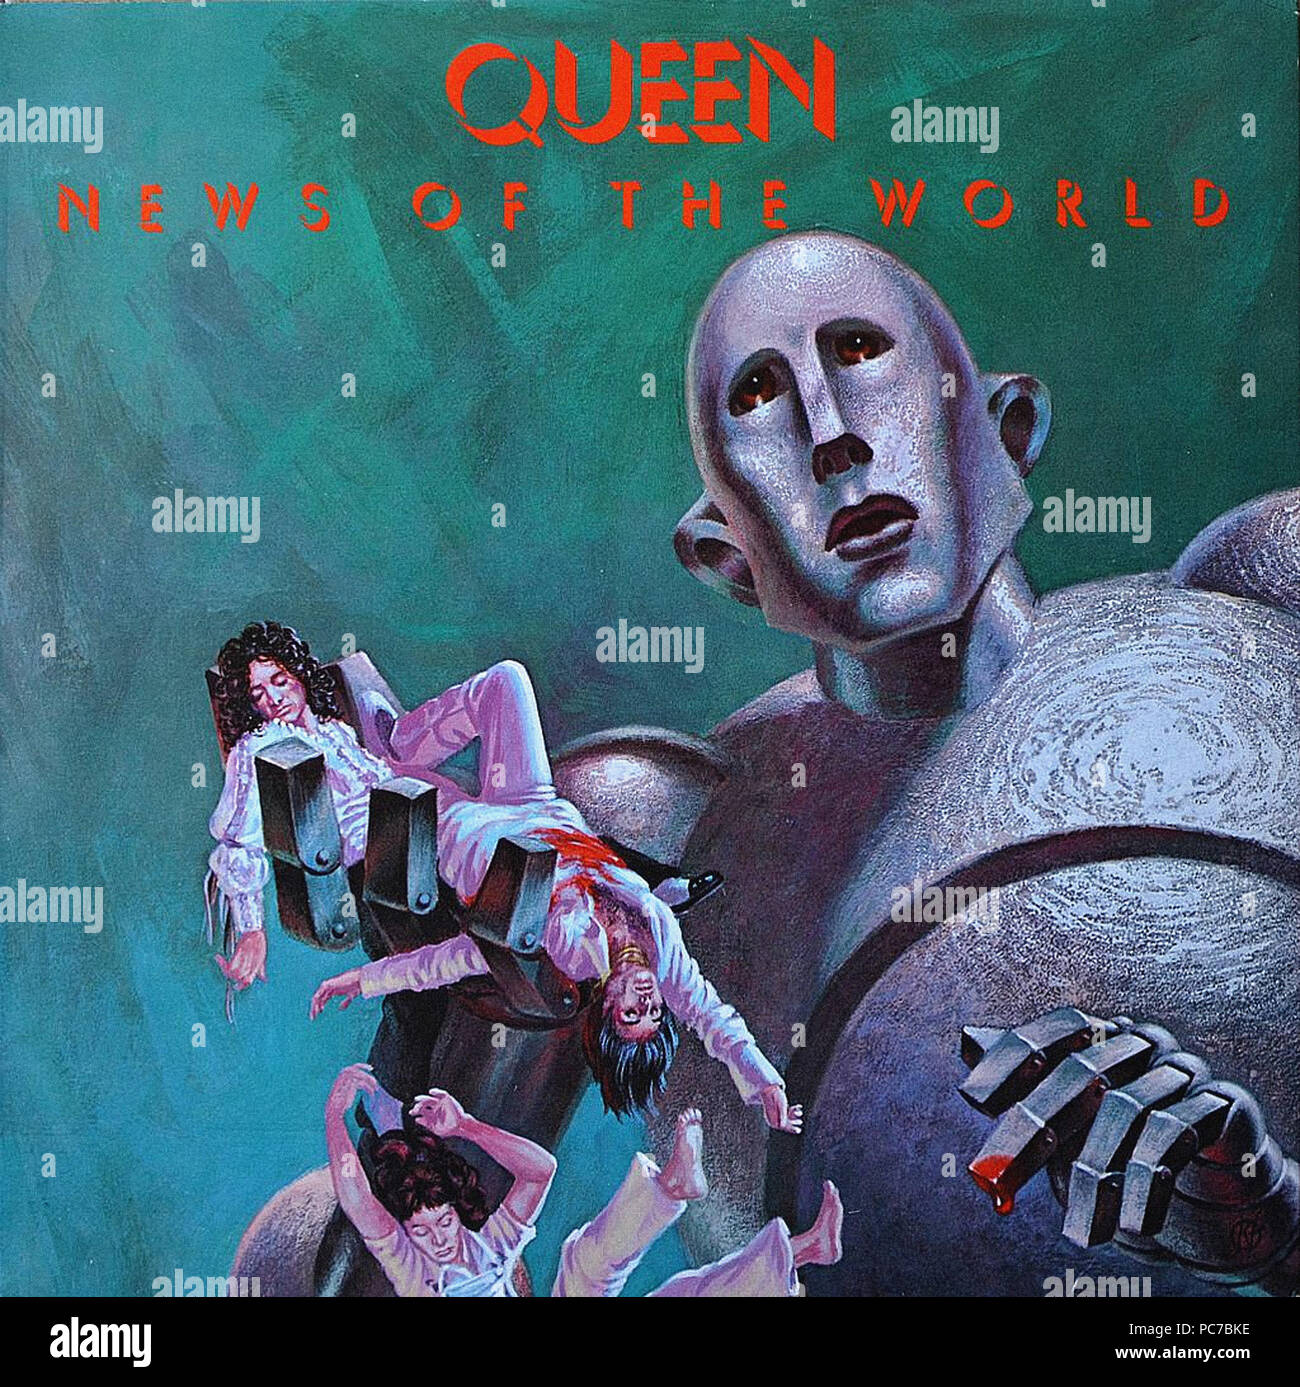 Queen   -  News Of The World  -  Vintage vinyl album cover Stock Photo